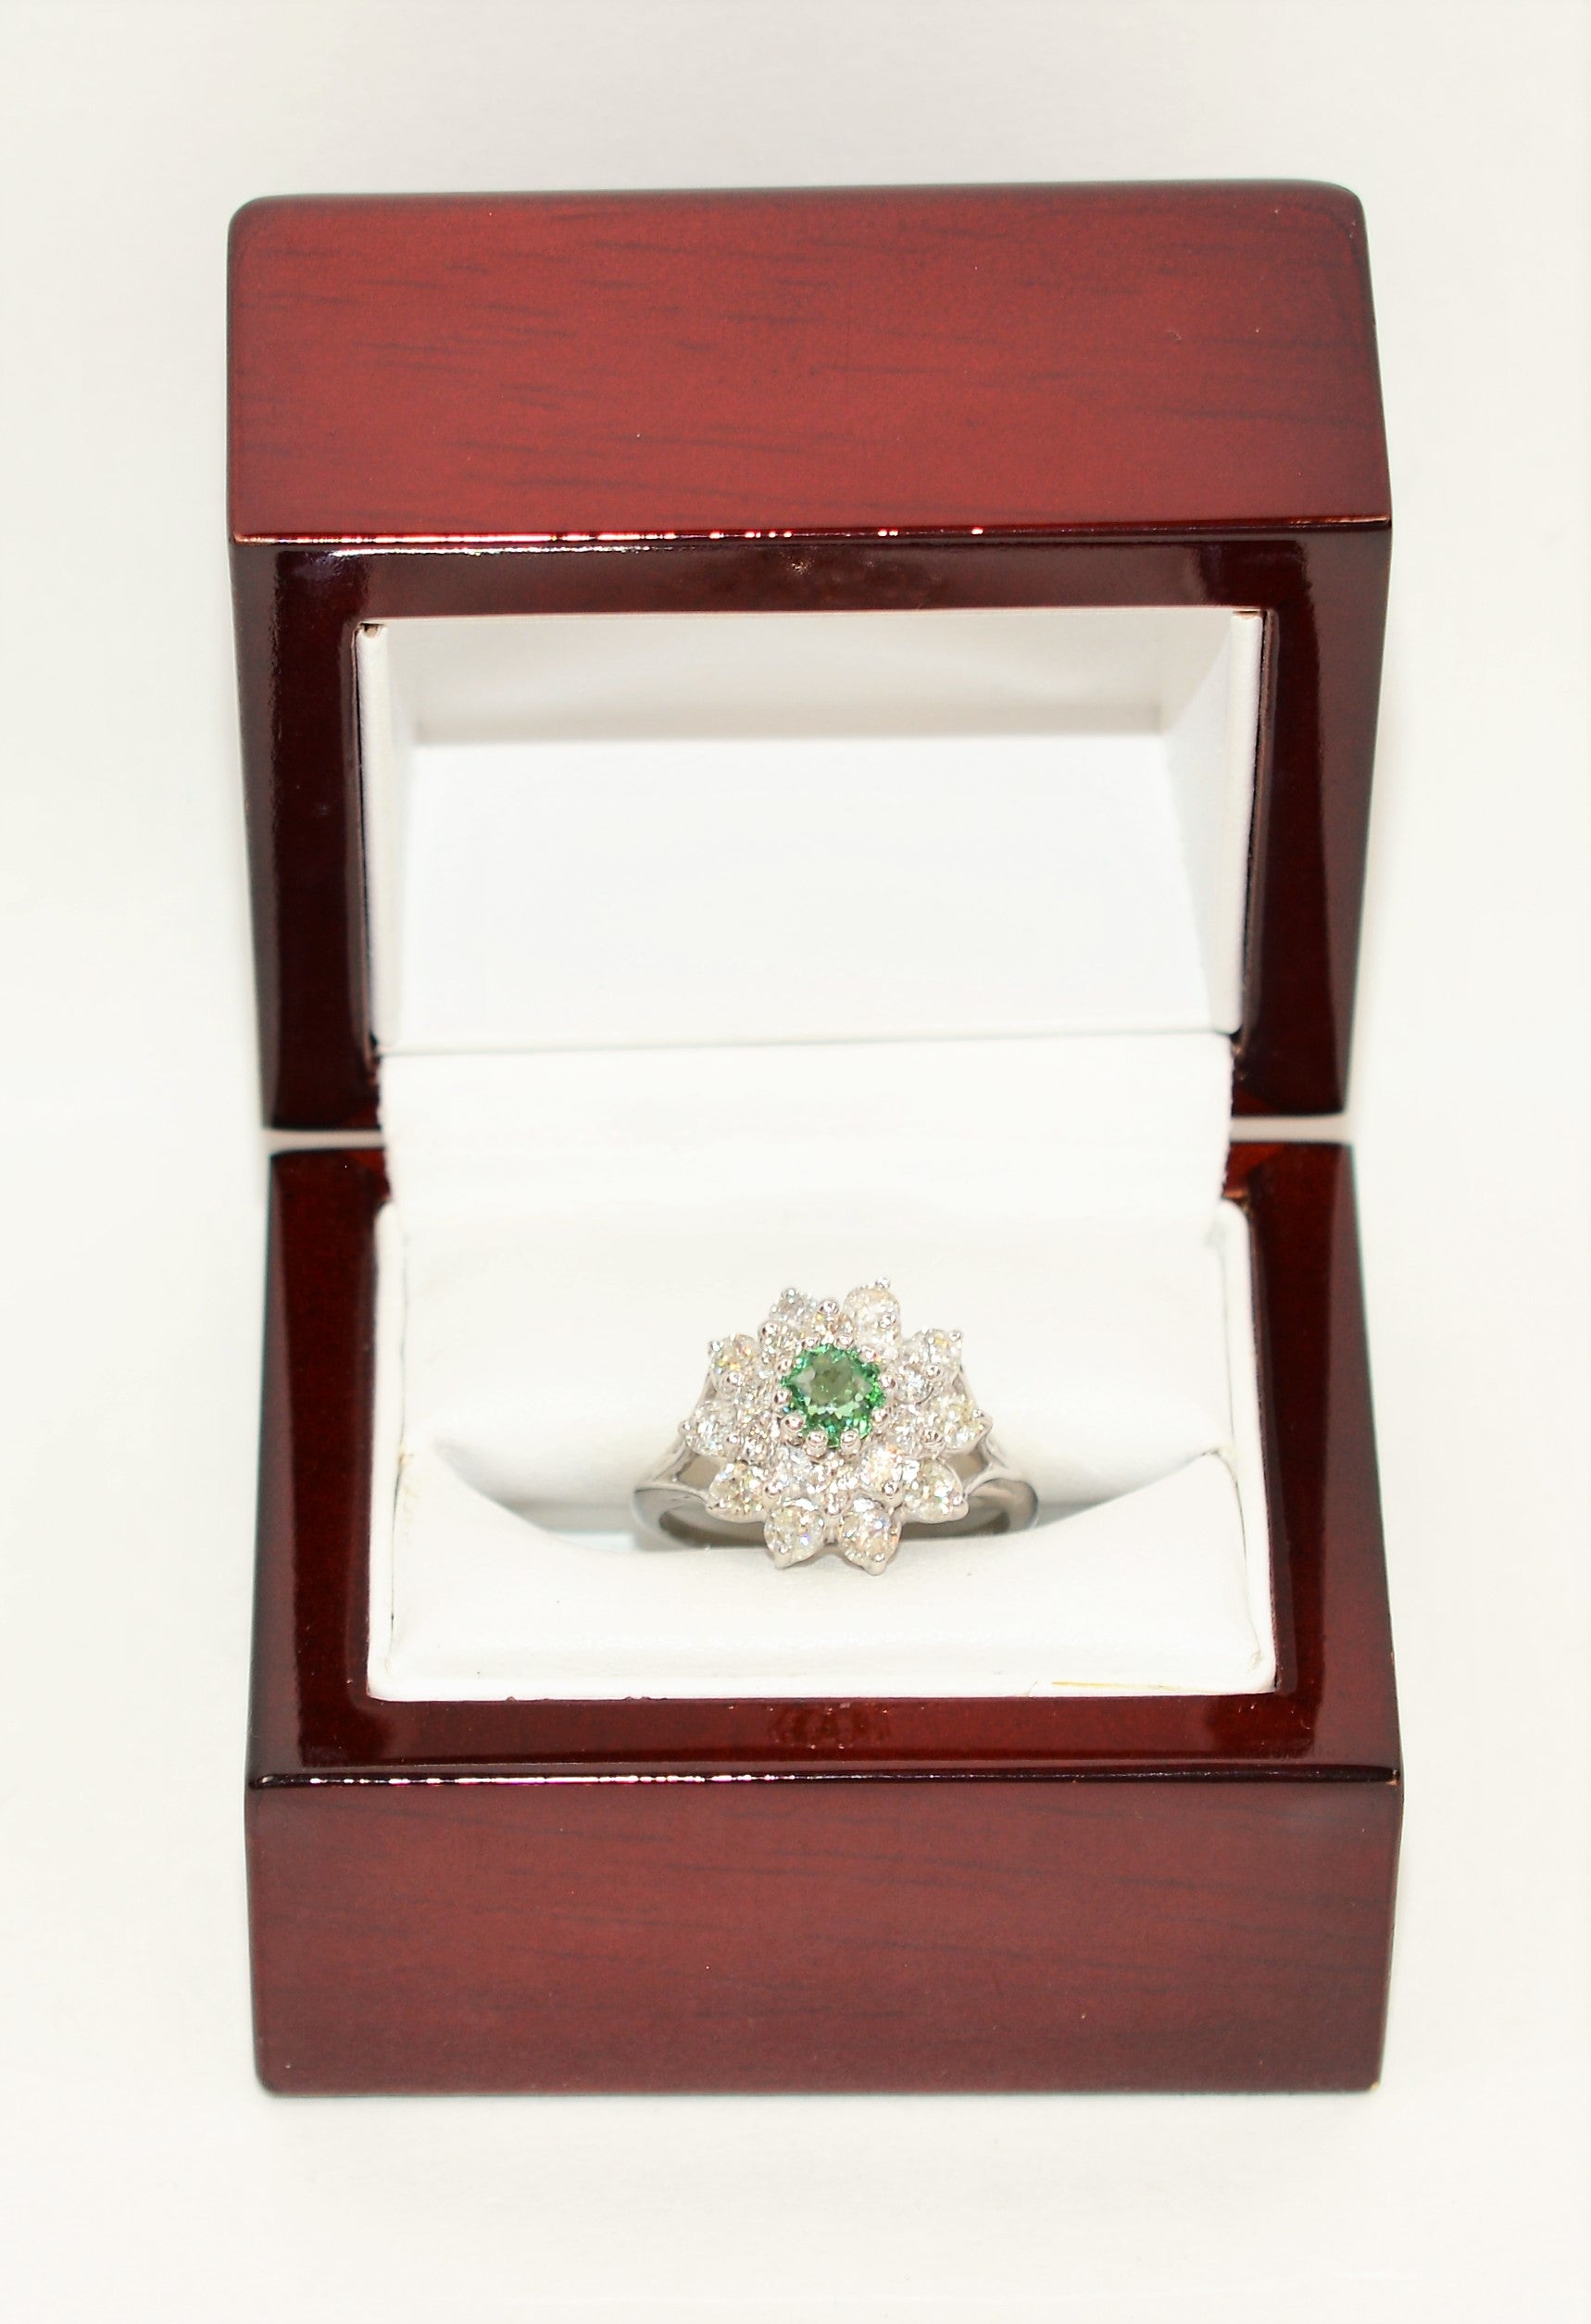 Natural Paraiba Tourmaline & Diamond Ring 14K Solid White Gold 2.46tcw Diamond Halo Ring Flower Ring Statement Ring Cocktail Ring Fine Jewel